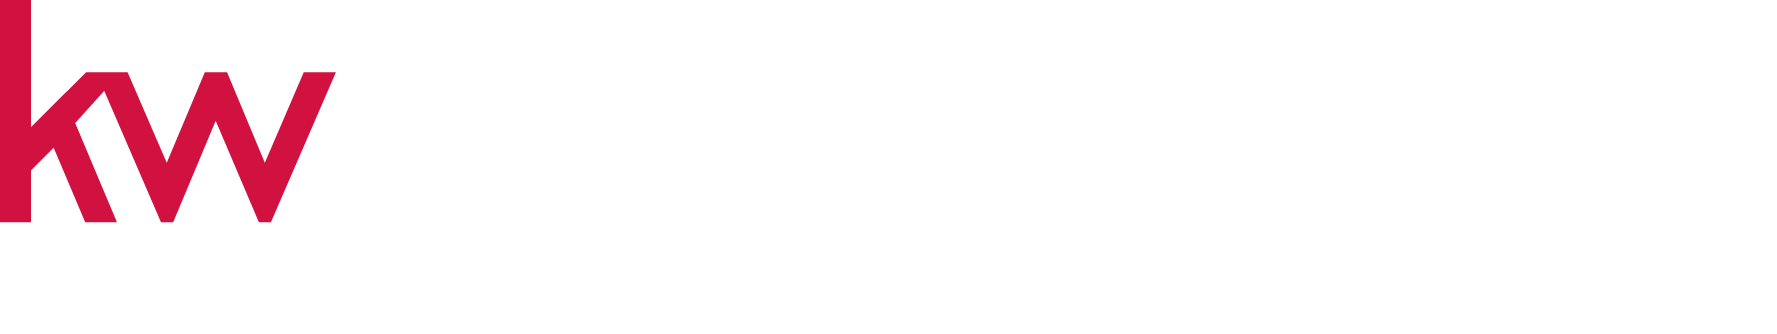 Evolution Real Estate Partners - Keller Williams Realty West Monmouth Logo